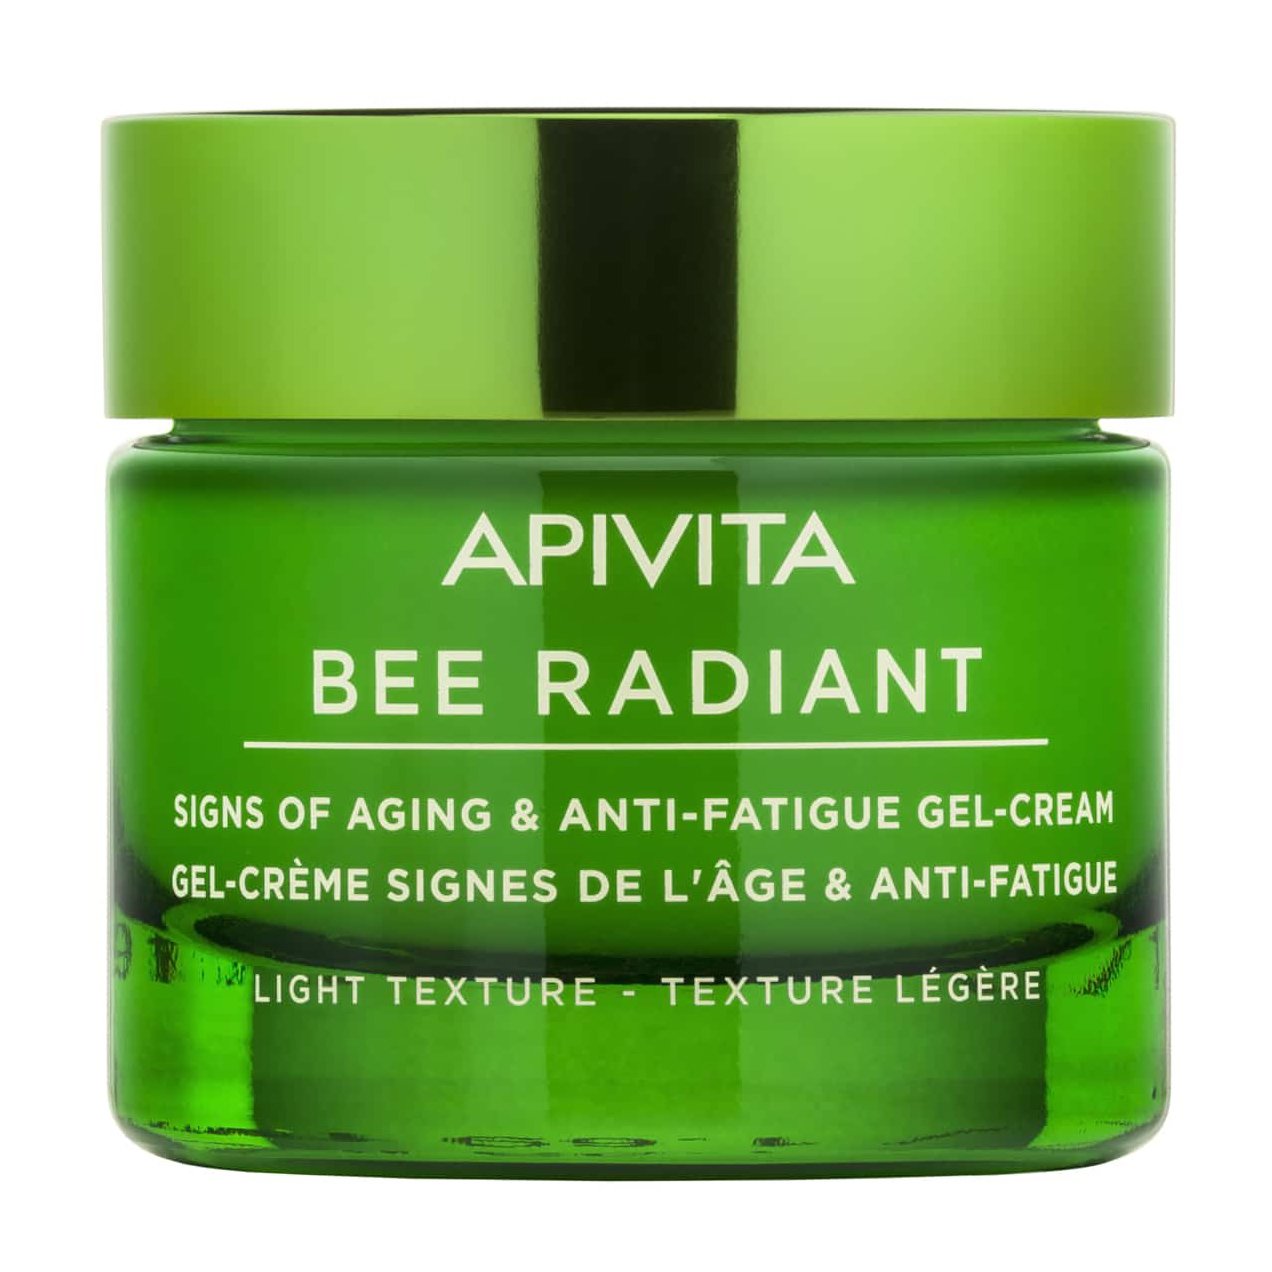 Apivita Bee Radiant Light Texture Gel-Cream Κρέμα-Gel Προσώπου Ελαφριάς Υφής για Σημάδια Γήρανσης & Ξεκούραστη Όψη 50ml